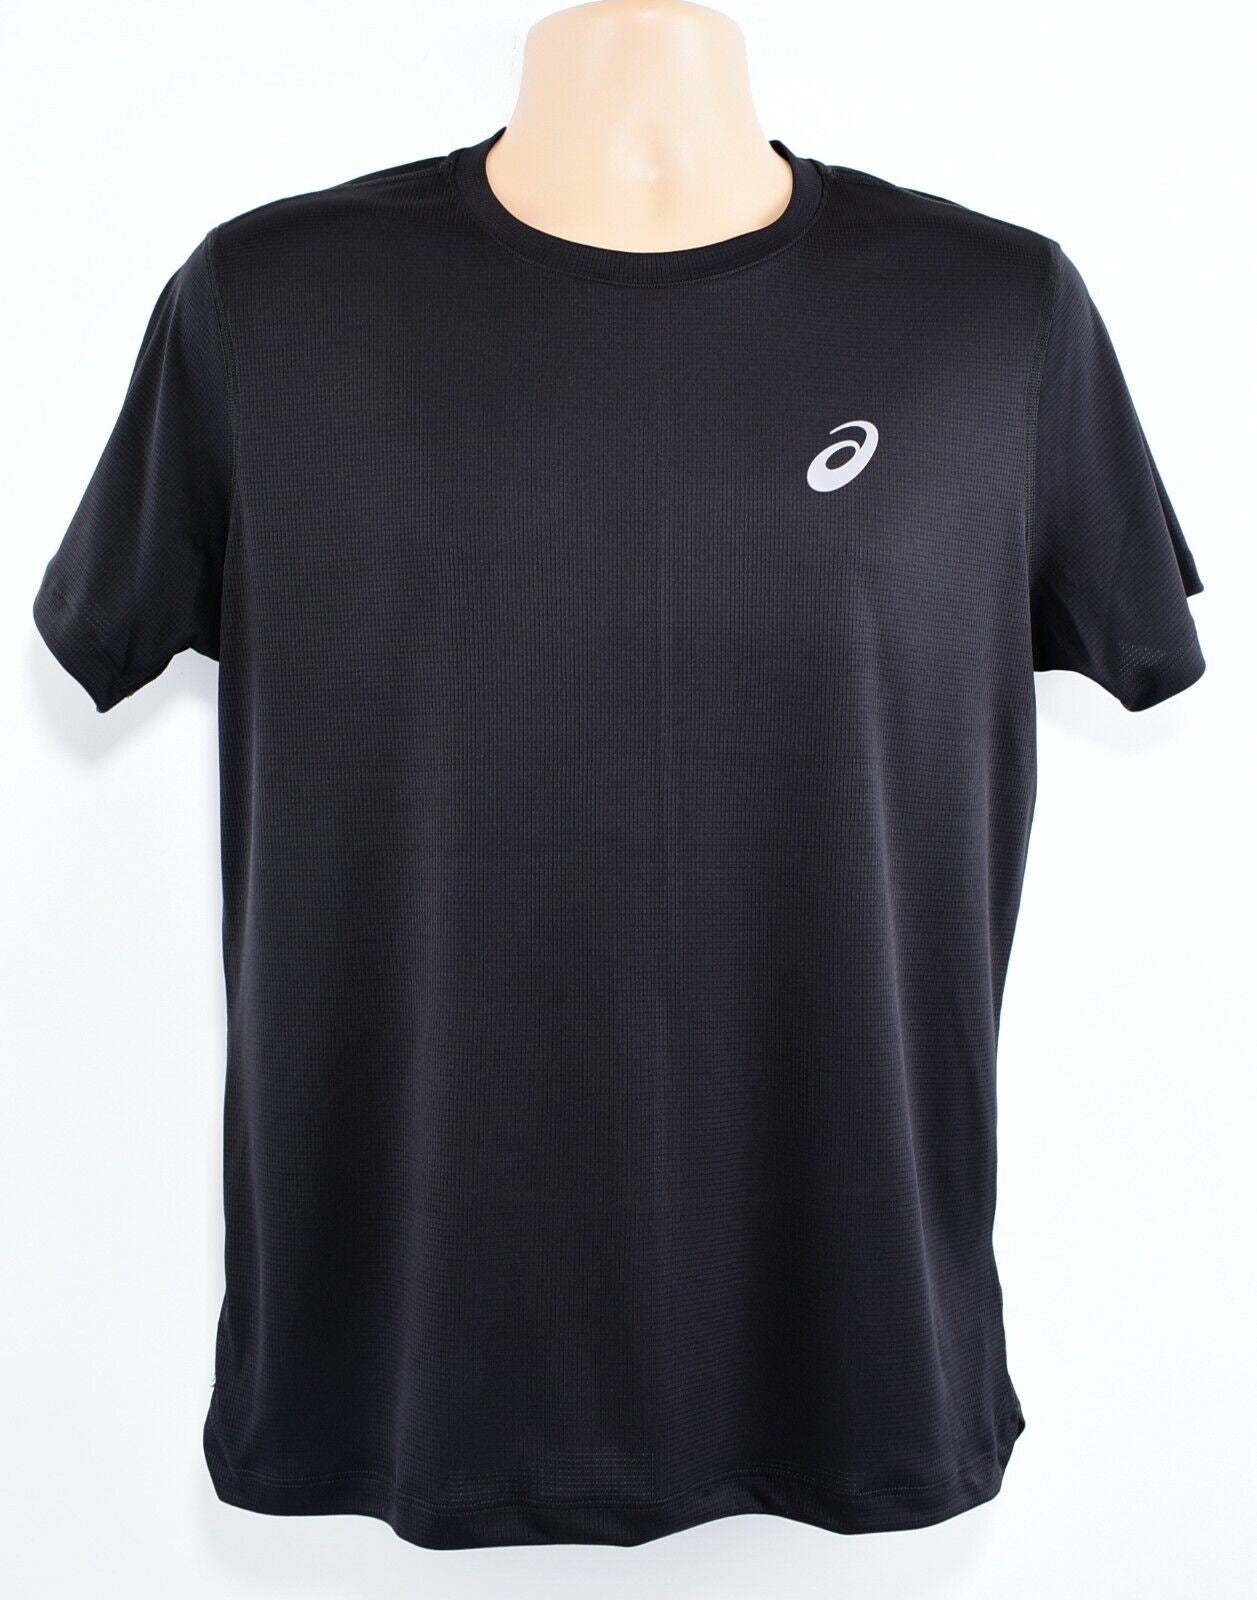 ASICS Performance Men's Activewear T-shirt, Black, size S